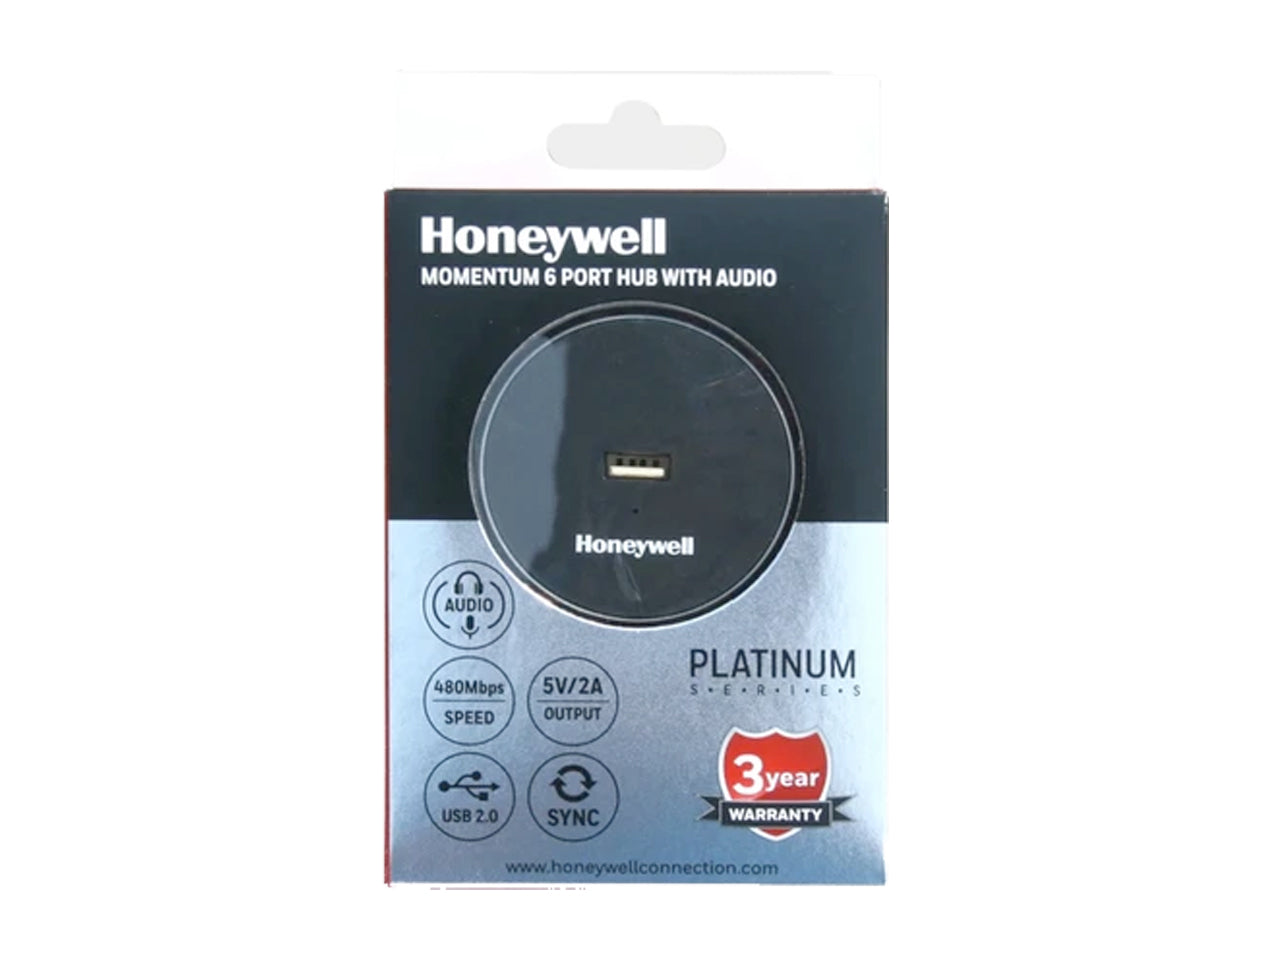 Honeywell Momentum 6 Port Hub with Audio